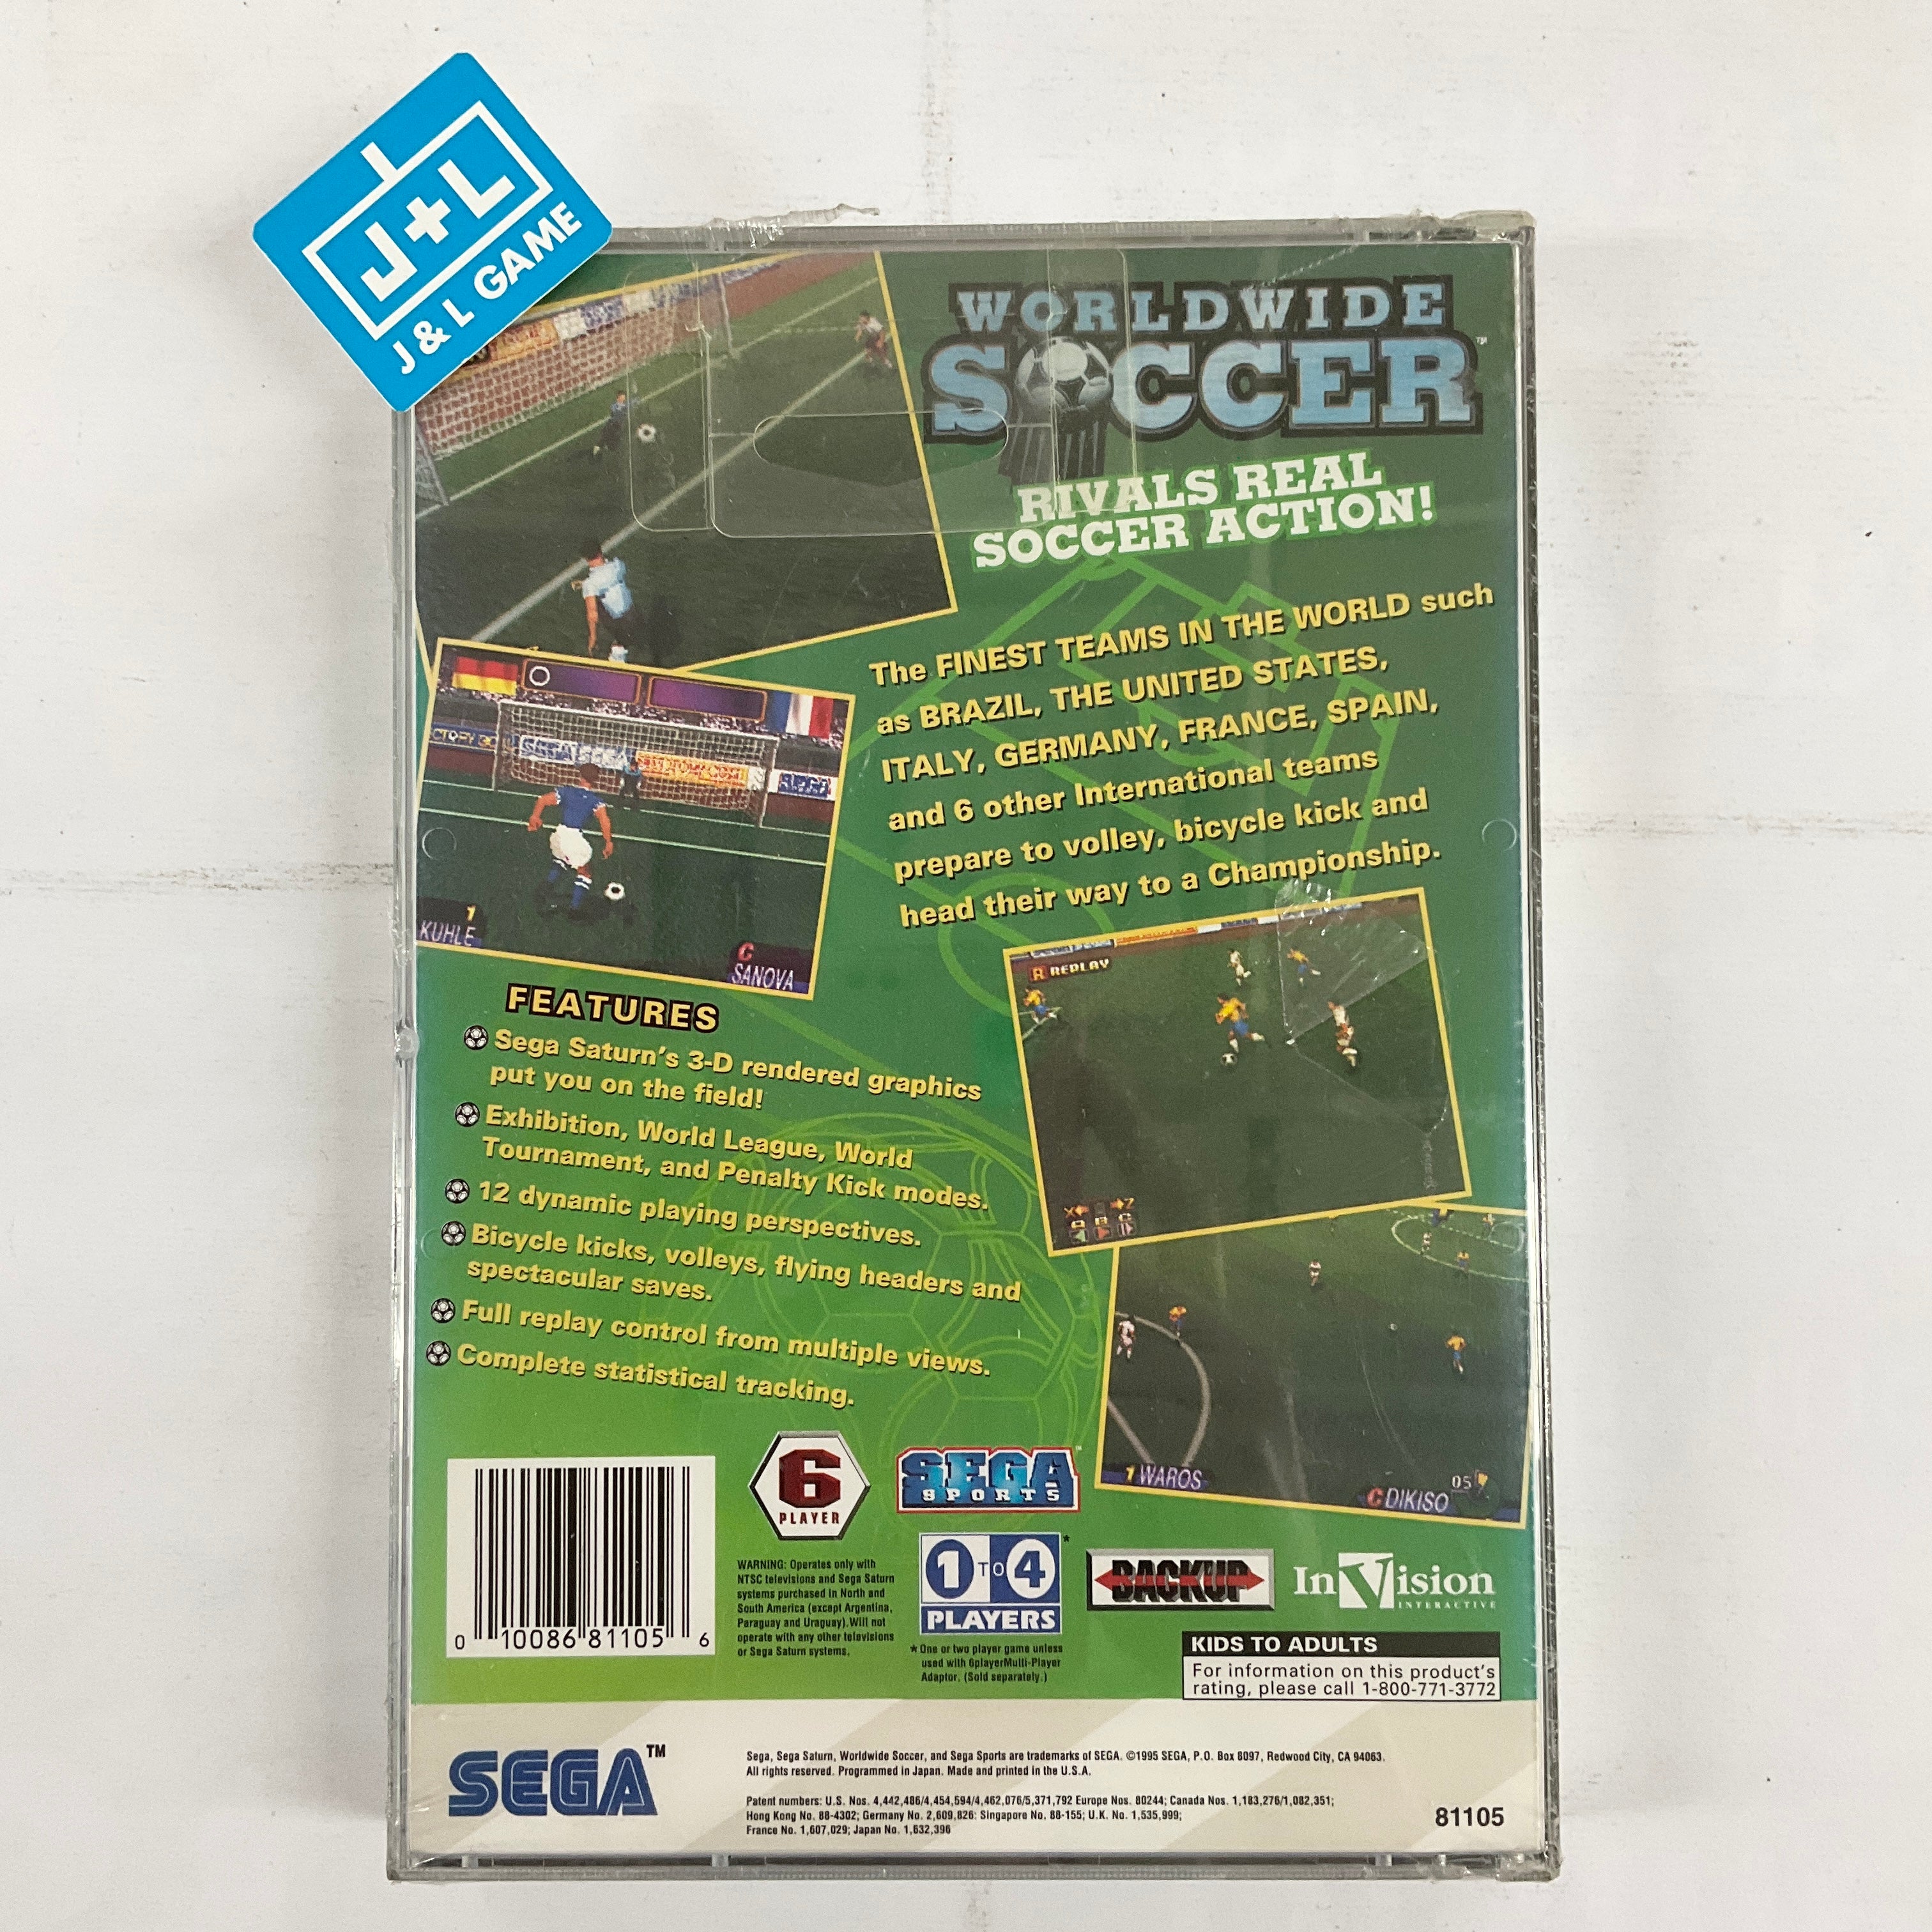 Worldwide Soccer: Sega International Victory Goal Edition - (SS) SEGA Saturn Video Games Sega   